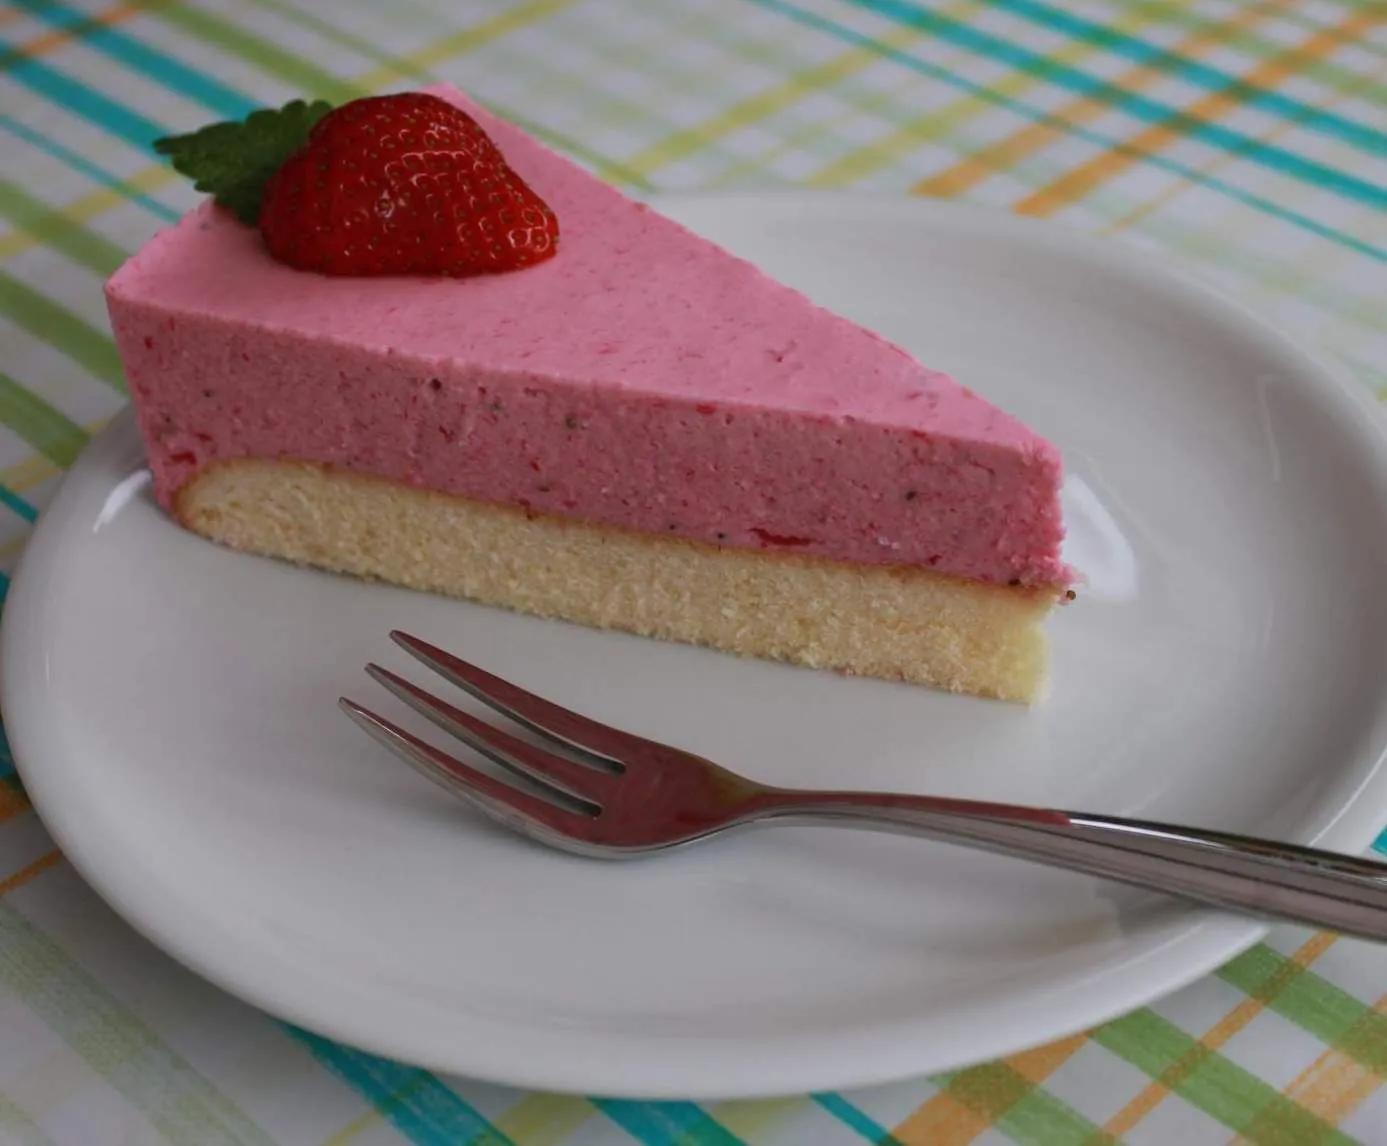 Erdbeer-Quark-Torte | Rezept | Kuchen und torten rezepte, Backrezepte ...